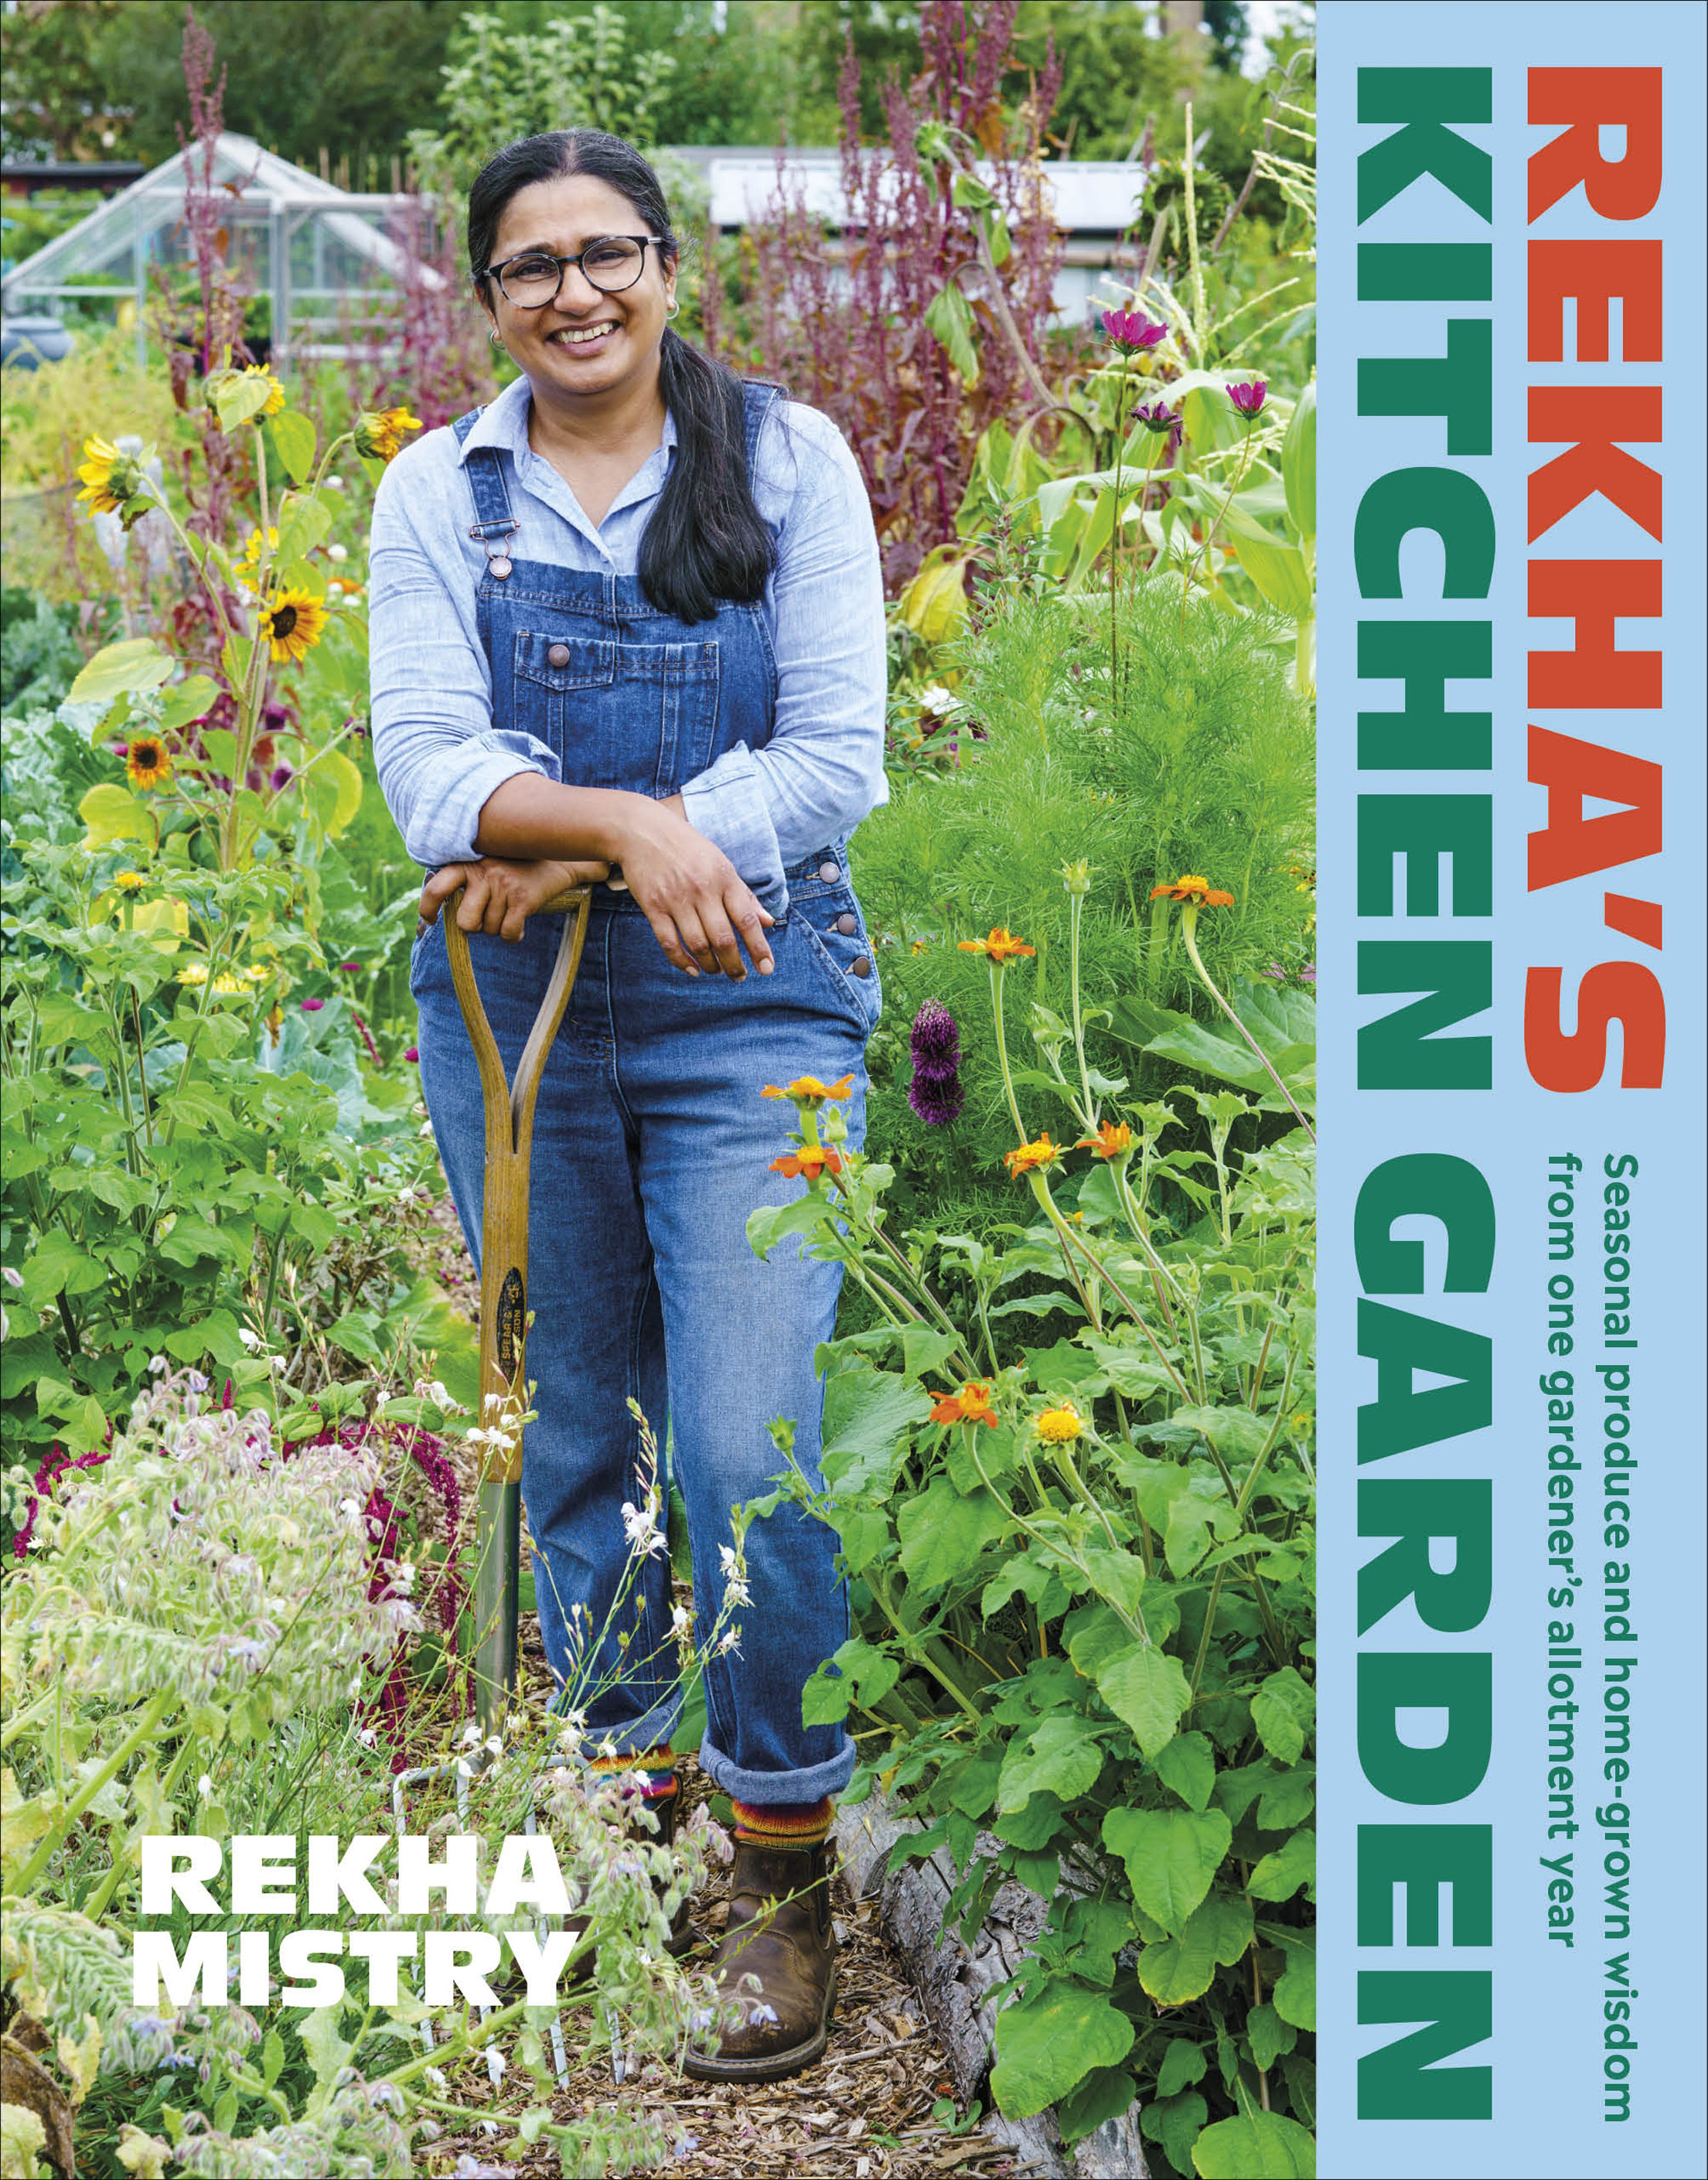 Book jacket of Rekha's Kitchen Garden by Rekha Mistry (DK/PA)